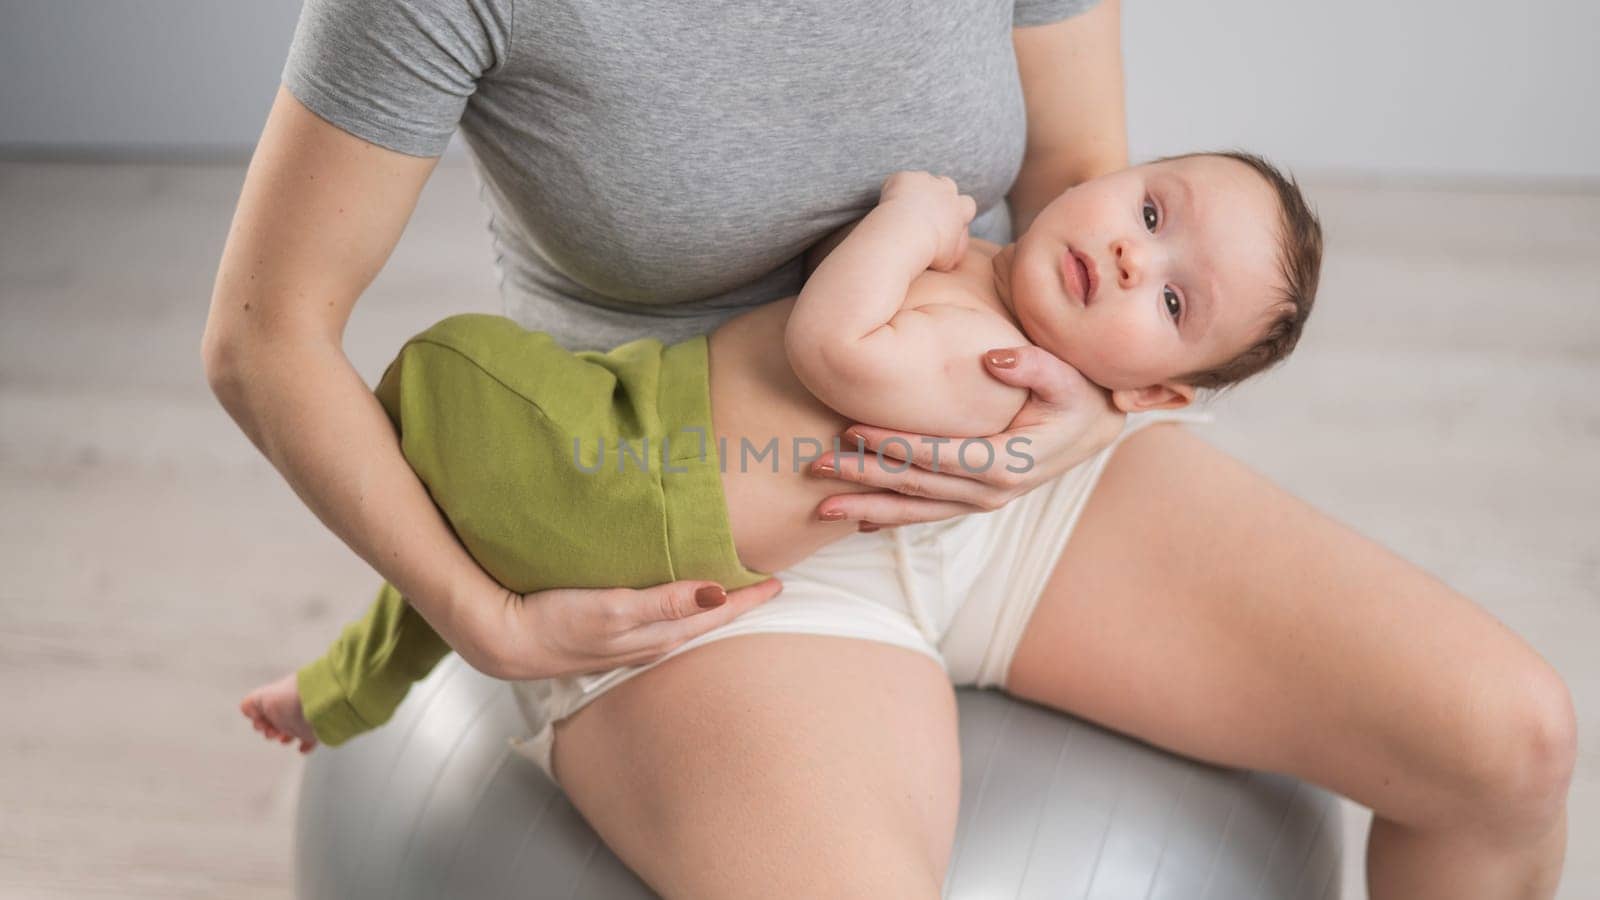 A faceless woman rocks her newborn son on a fitball